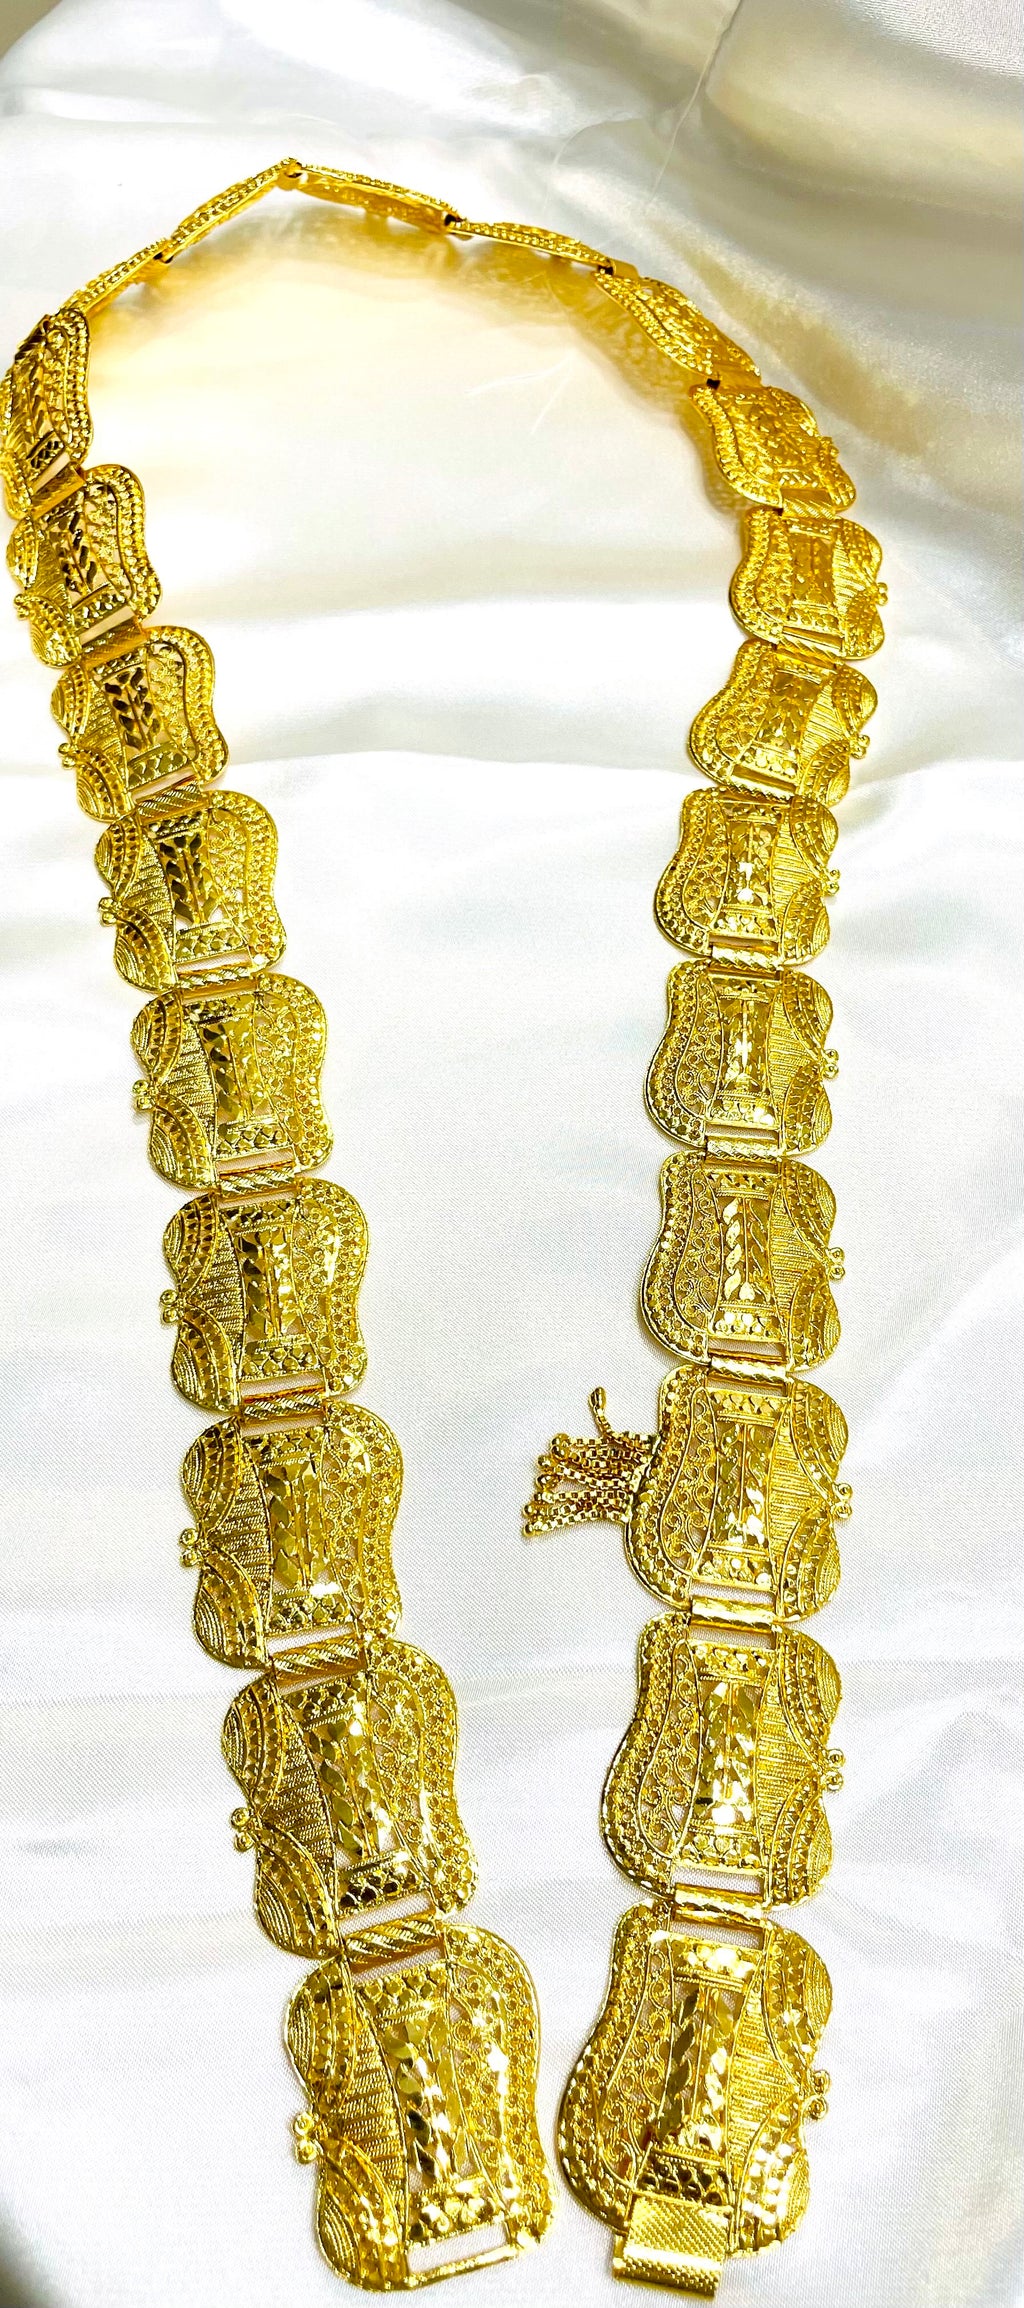 Gold belt for Somali bridal/wedding dirac laying atop a white surface.